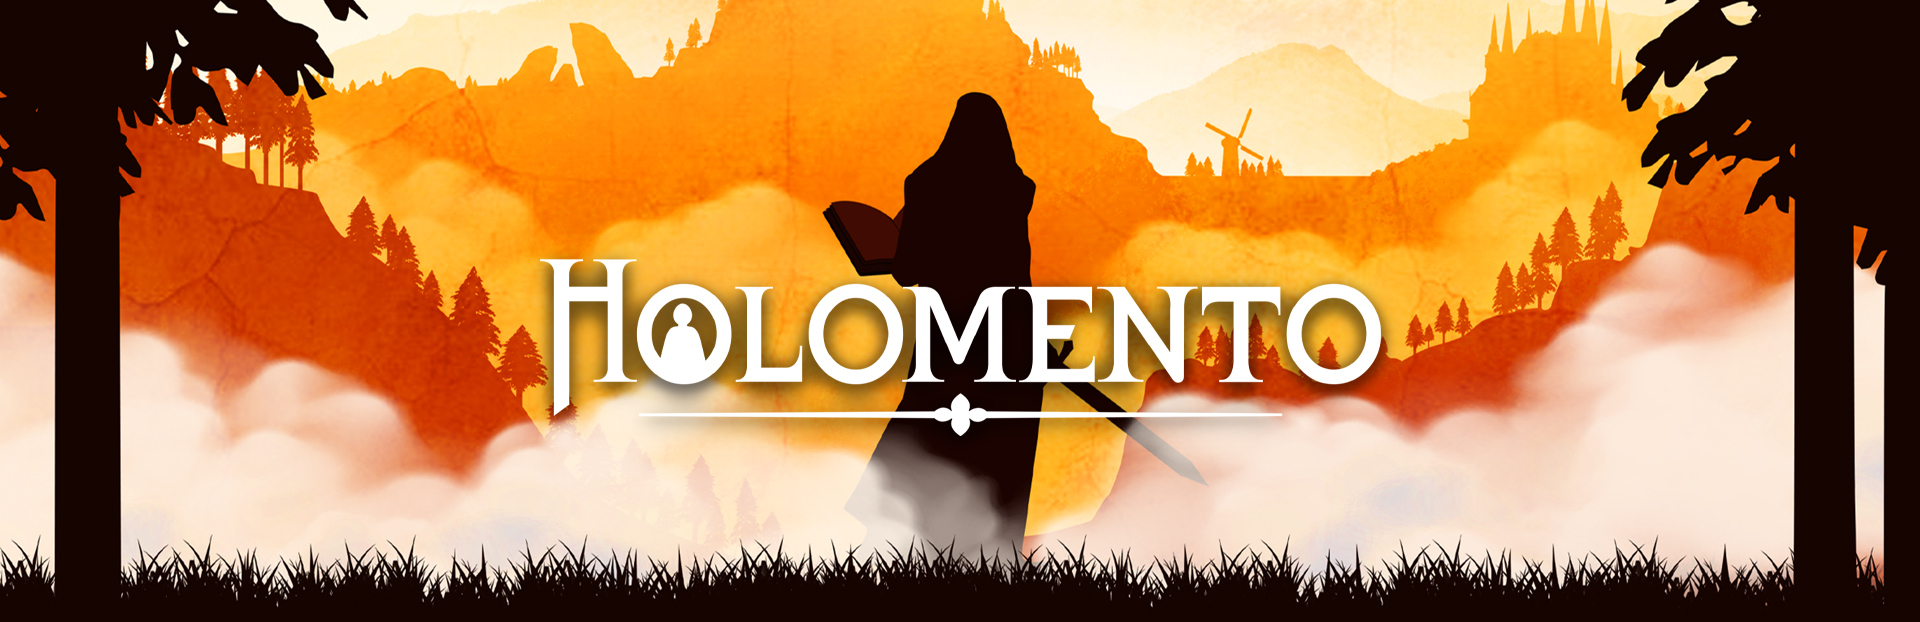 Holomento on Steam